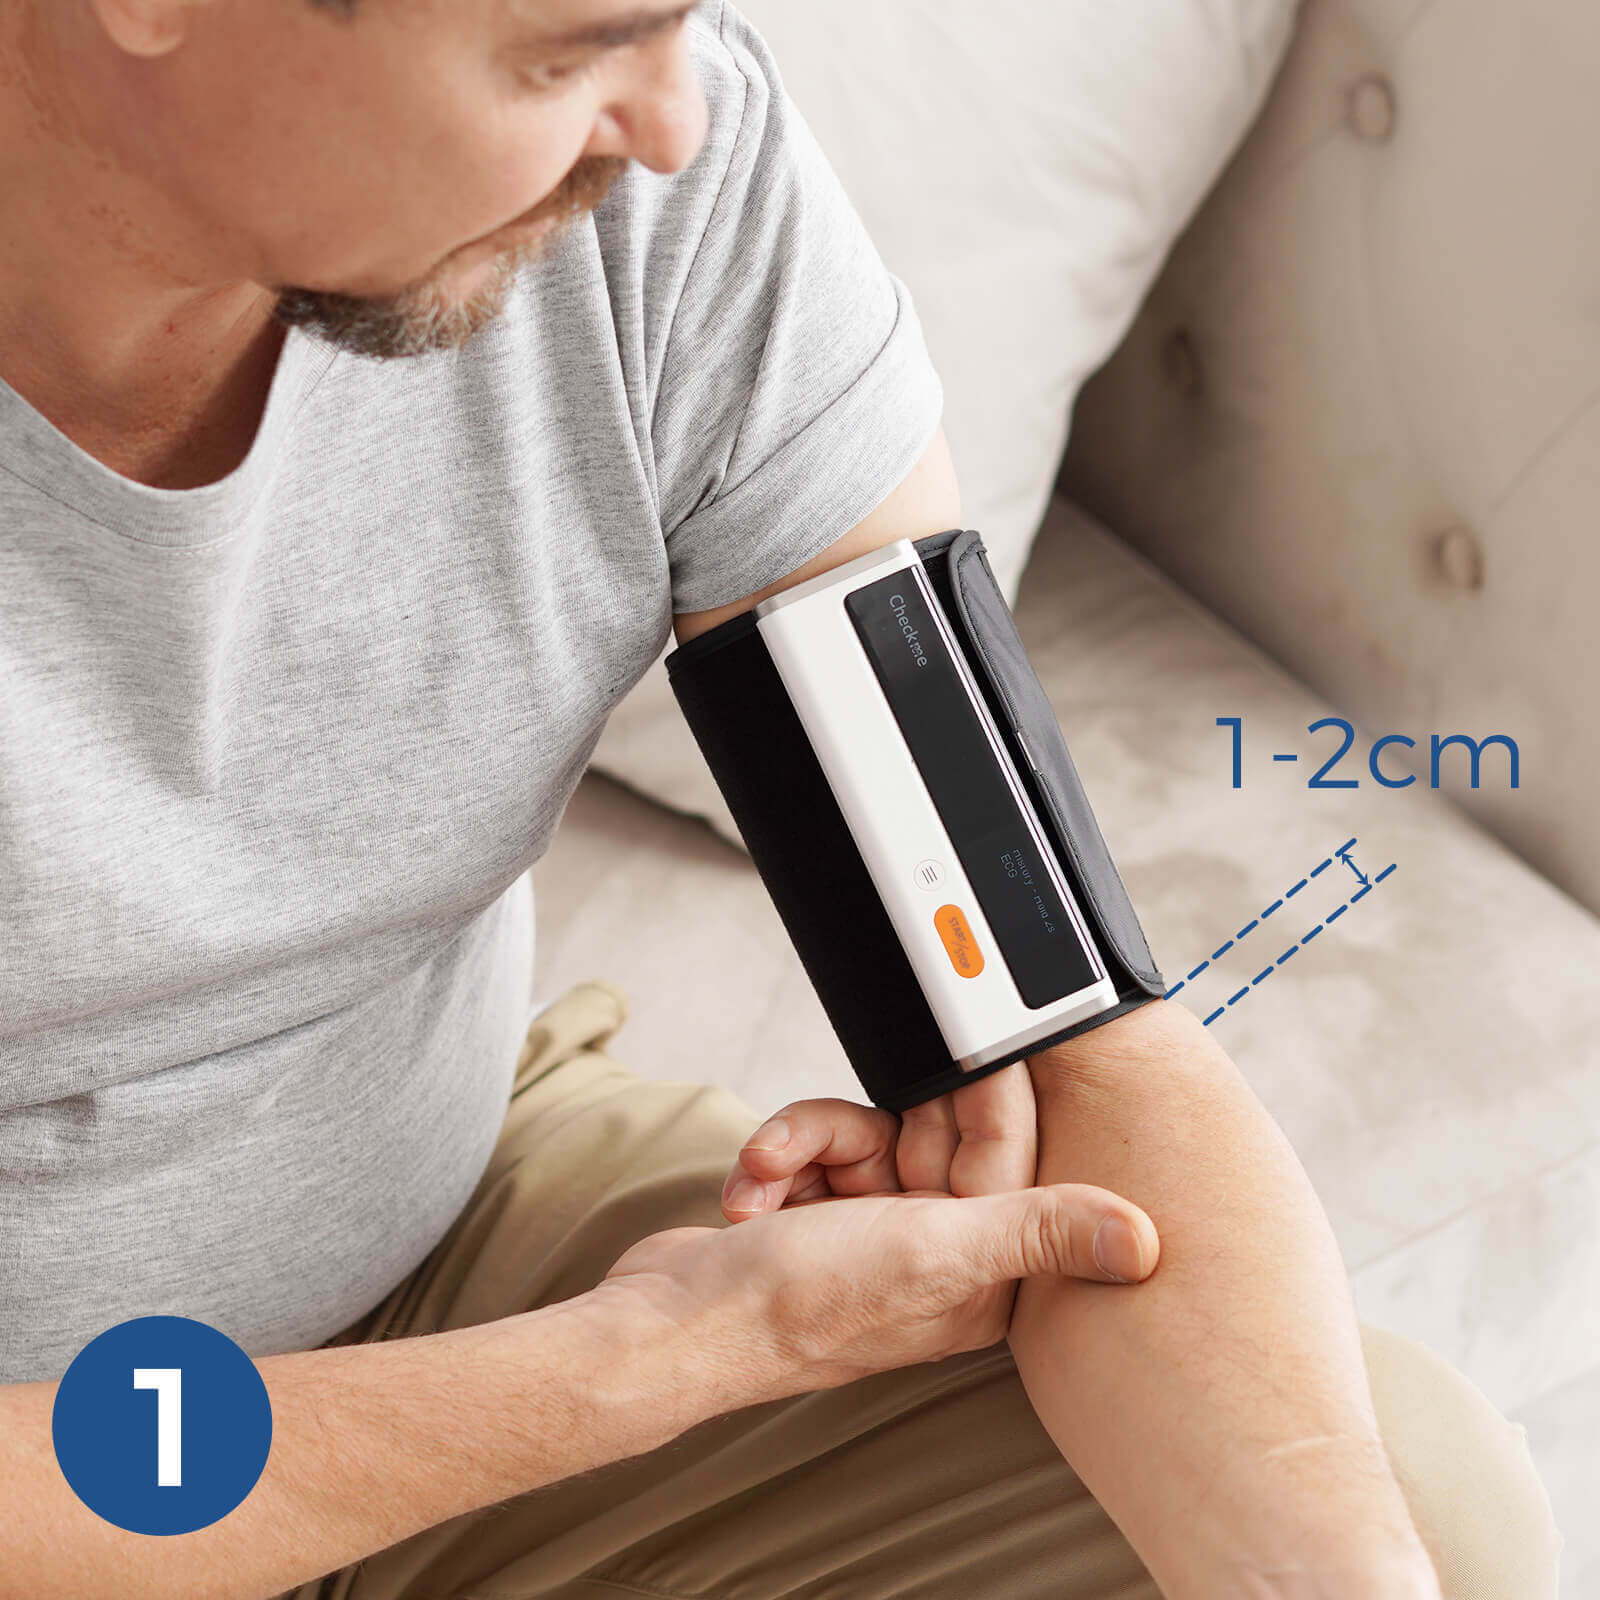 Checkme BP2A Arm Blood Pressure Monitor User Manual